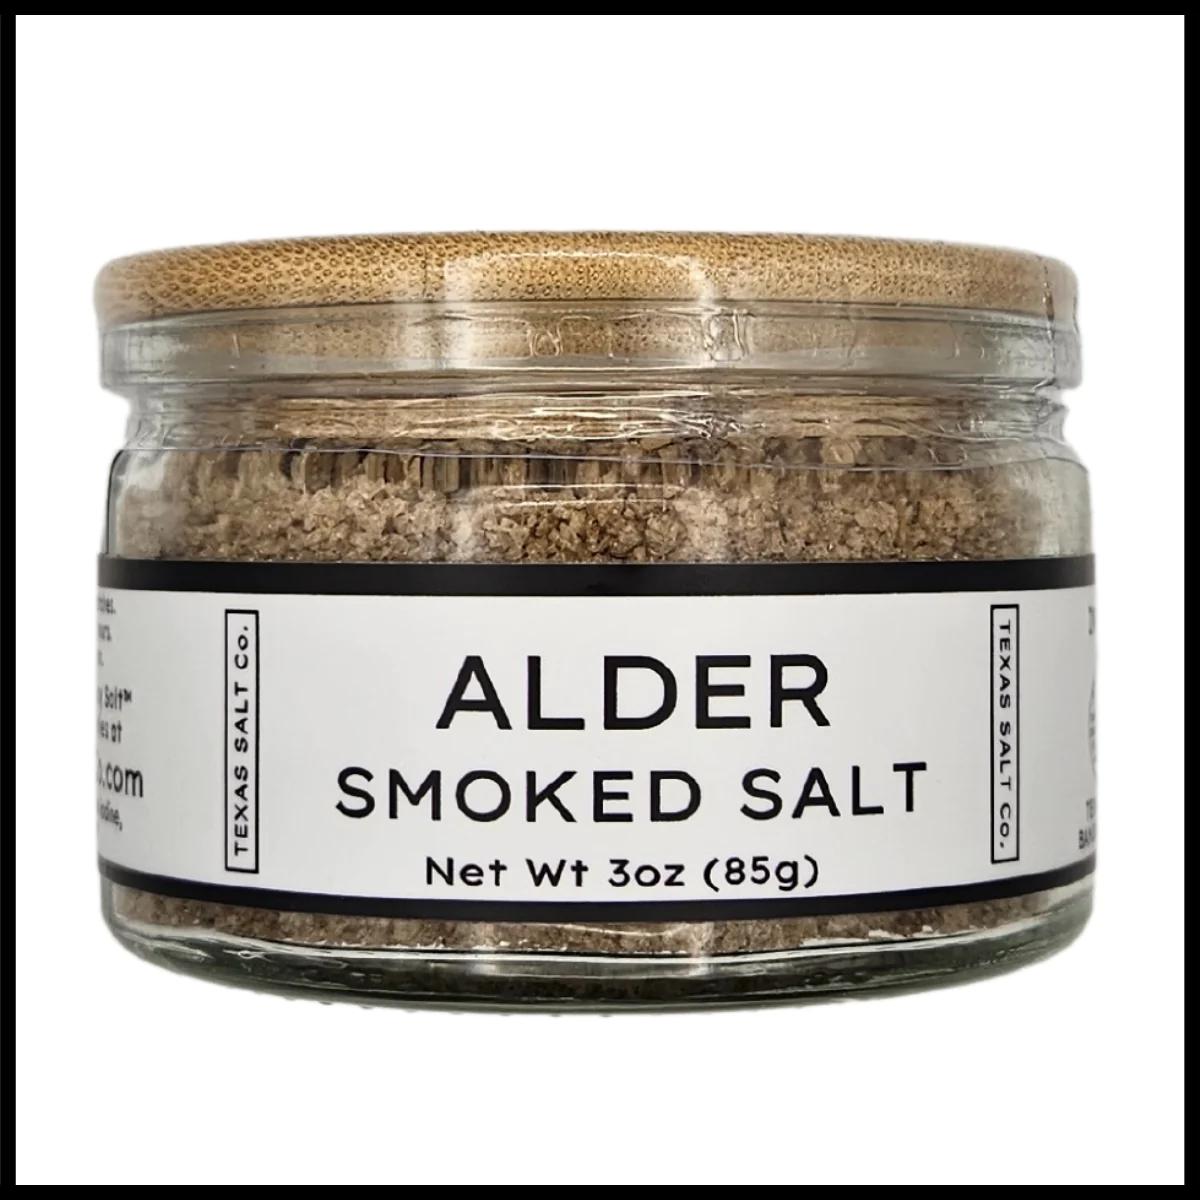 alder smoked salt - What is alderwood smoked salt